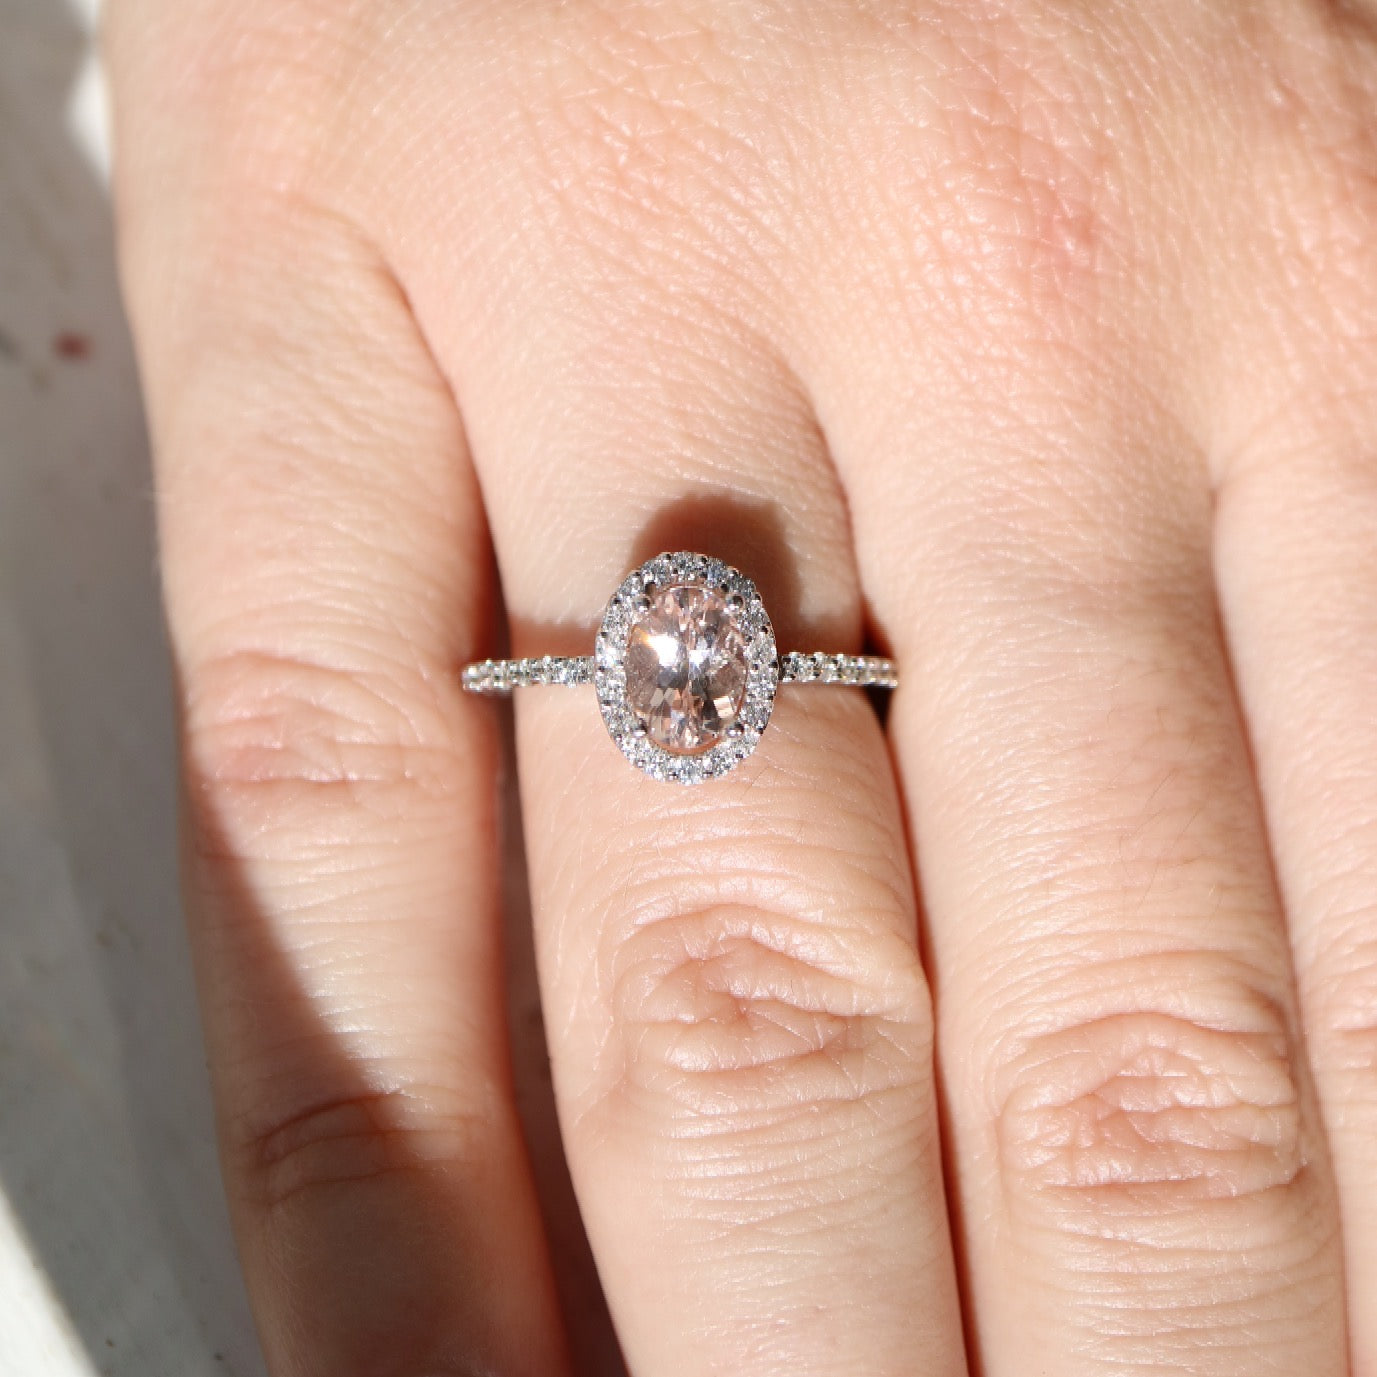 9ct white gold, morganite and diamond halo engagement ring